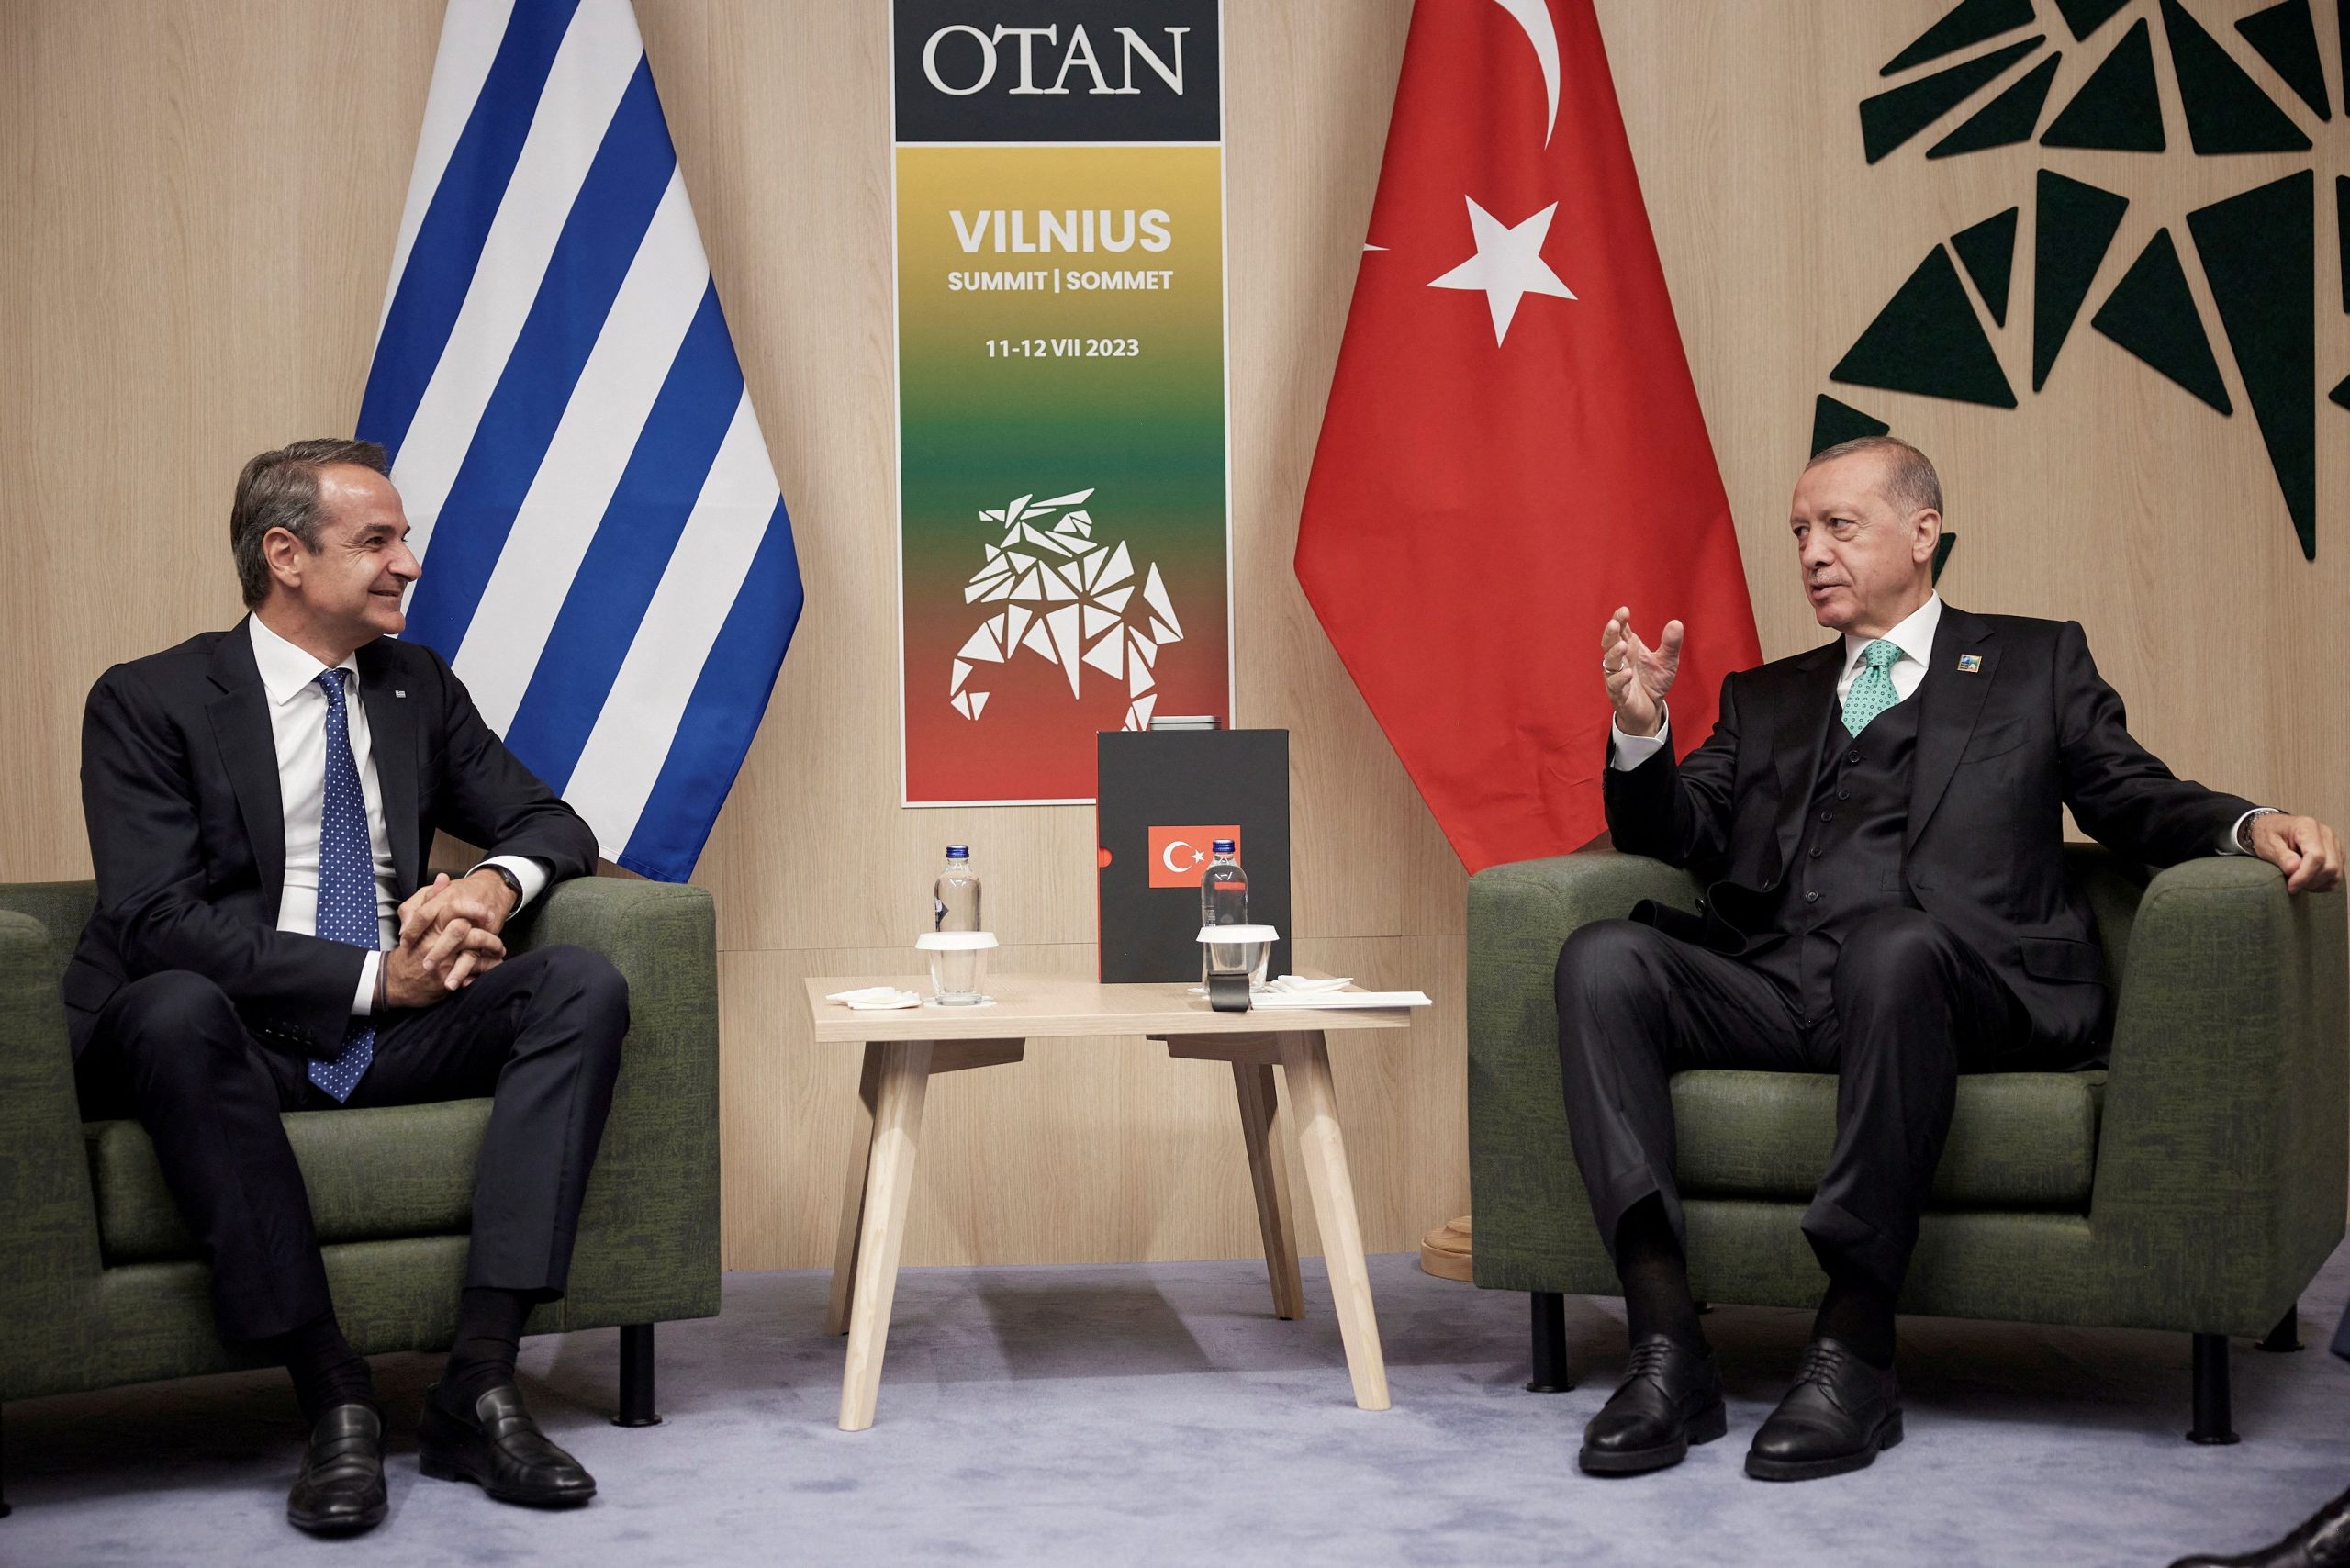 Erdogan Optimistic for Greek-Turkish Relations Ahead of Mitsotakis Meeting